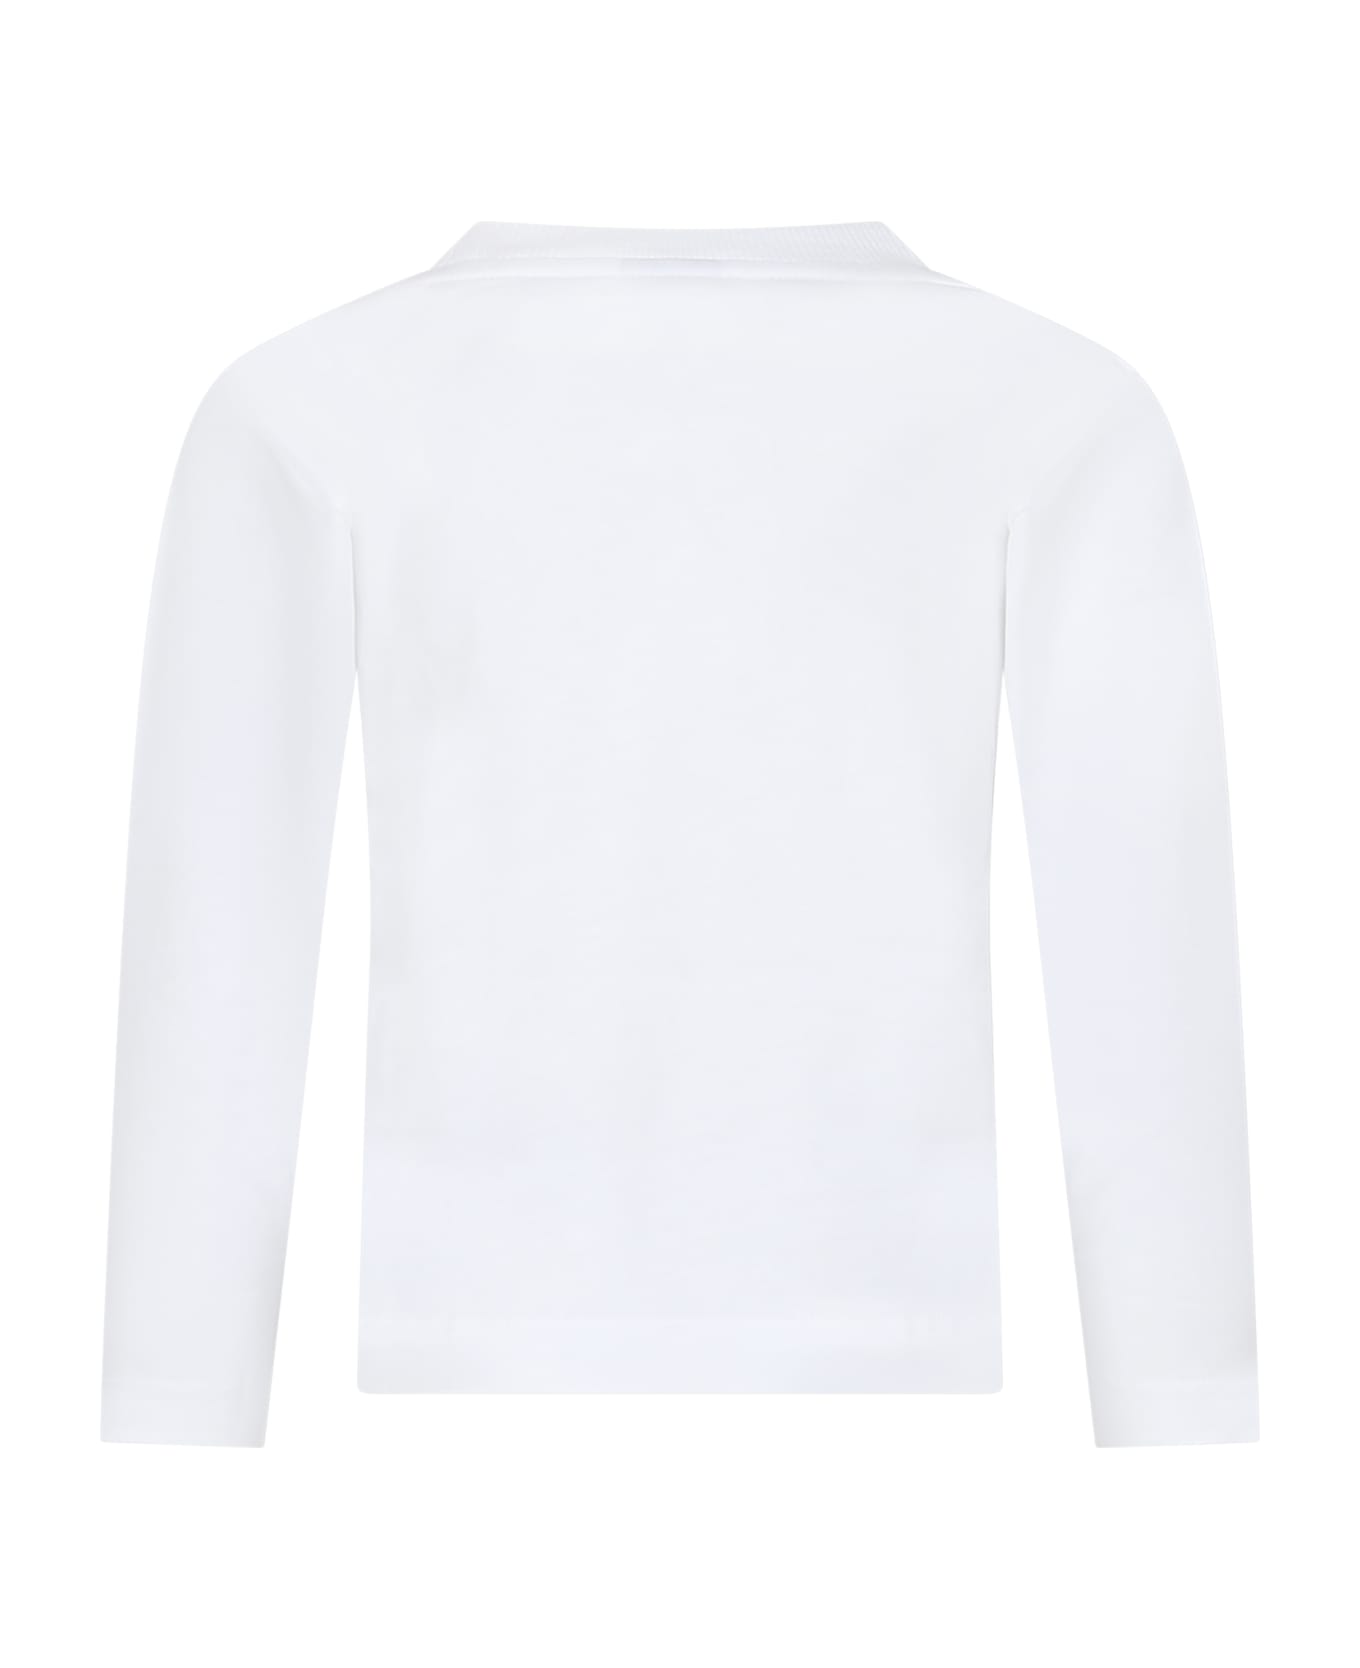 GCDS Mini White T-shirt For Boy With Logo - White